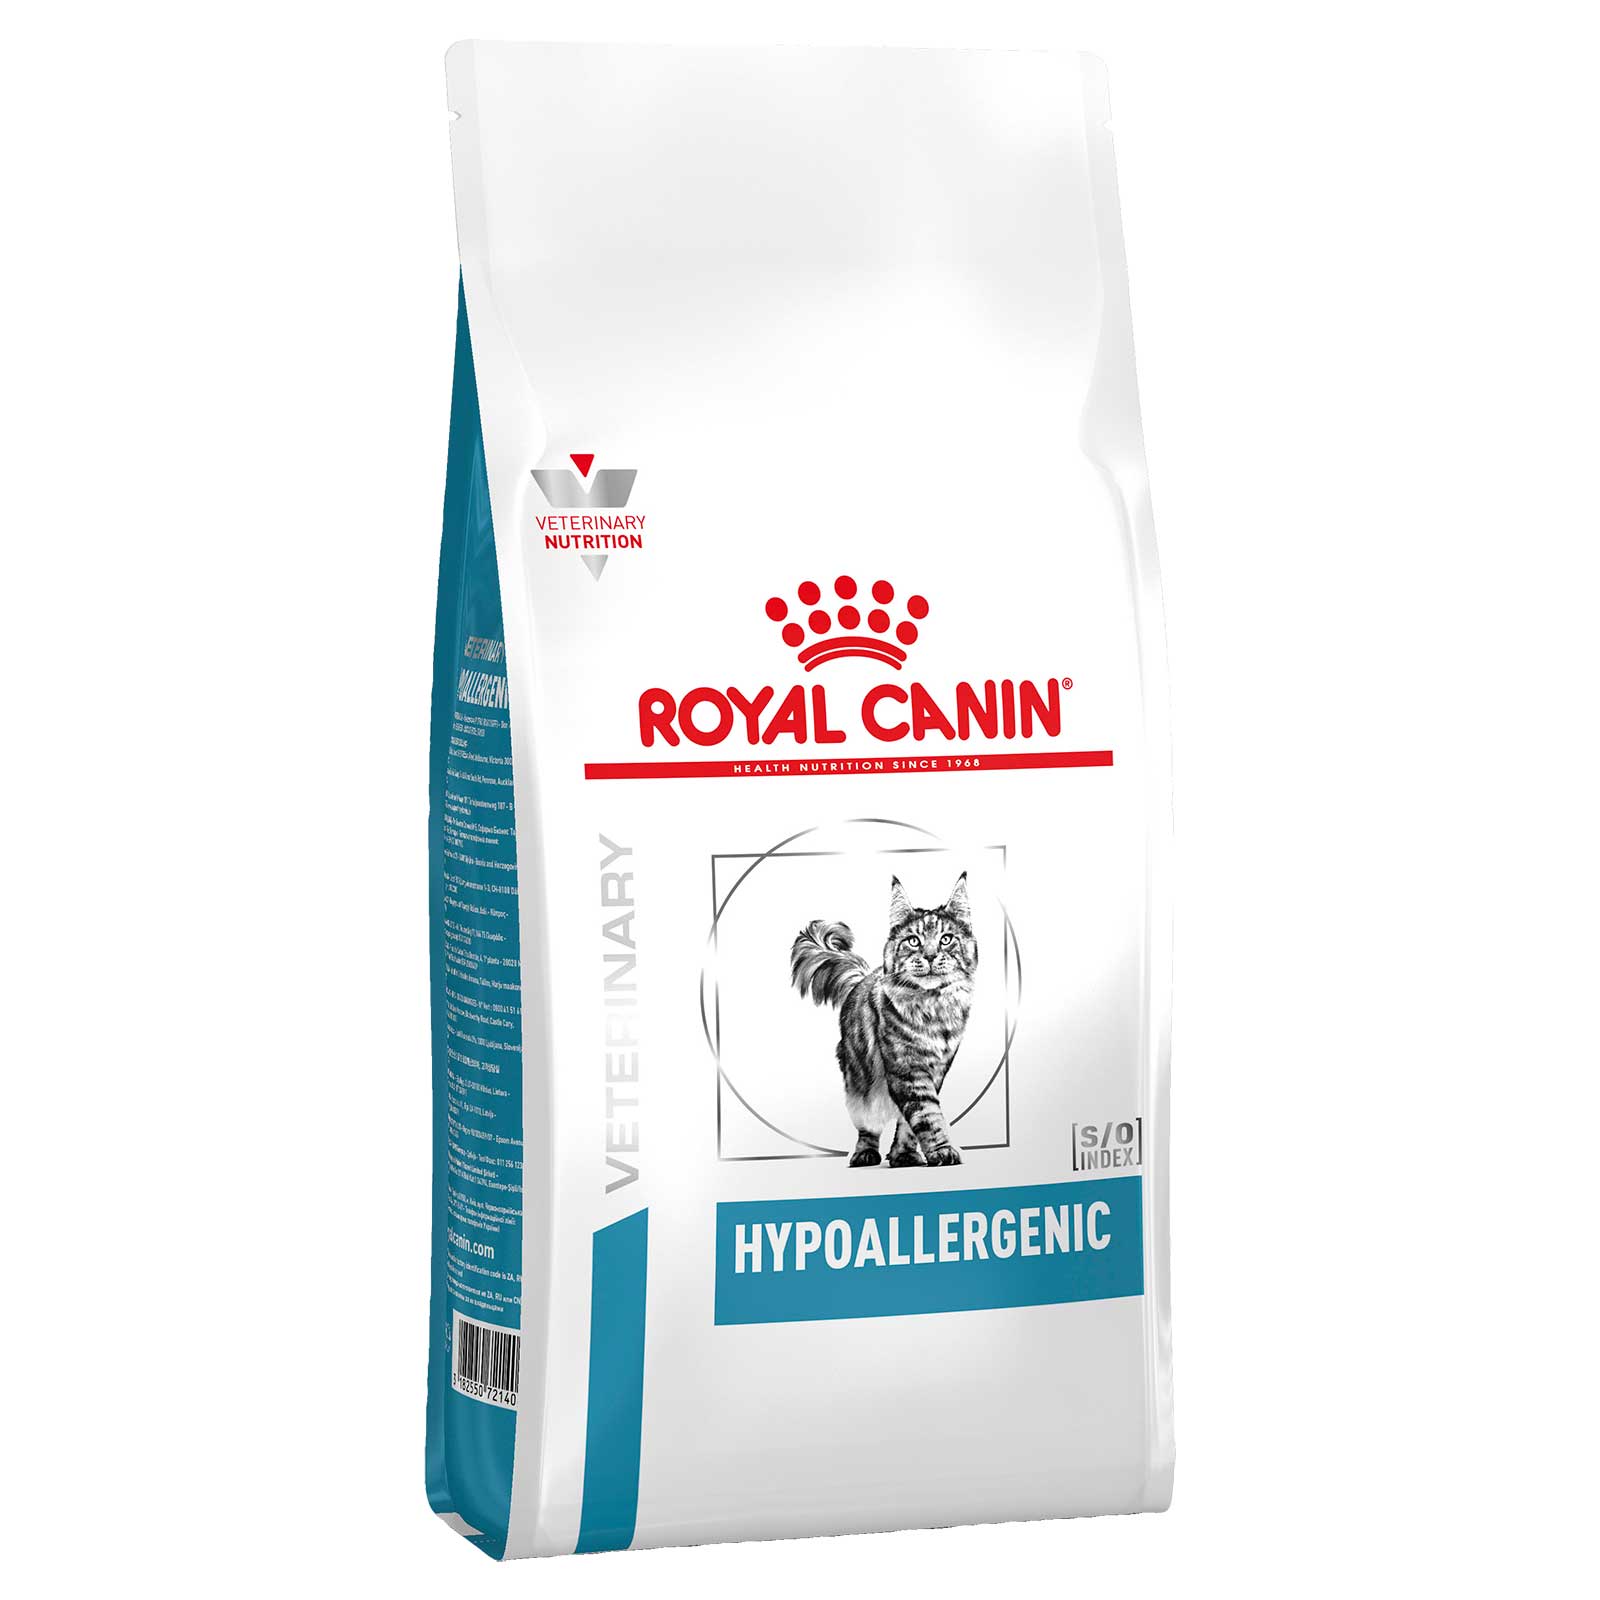 Royal Canin Veterinary Cat Food Hypoallergenic